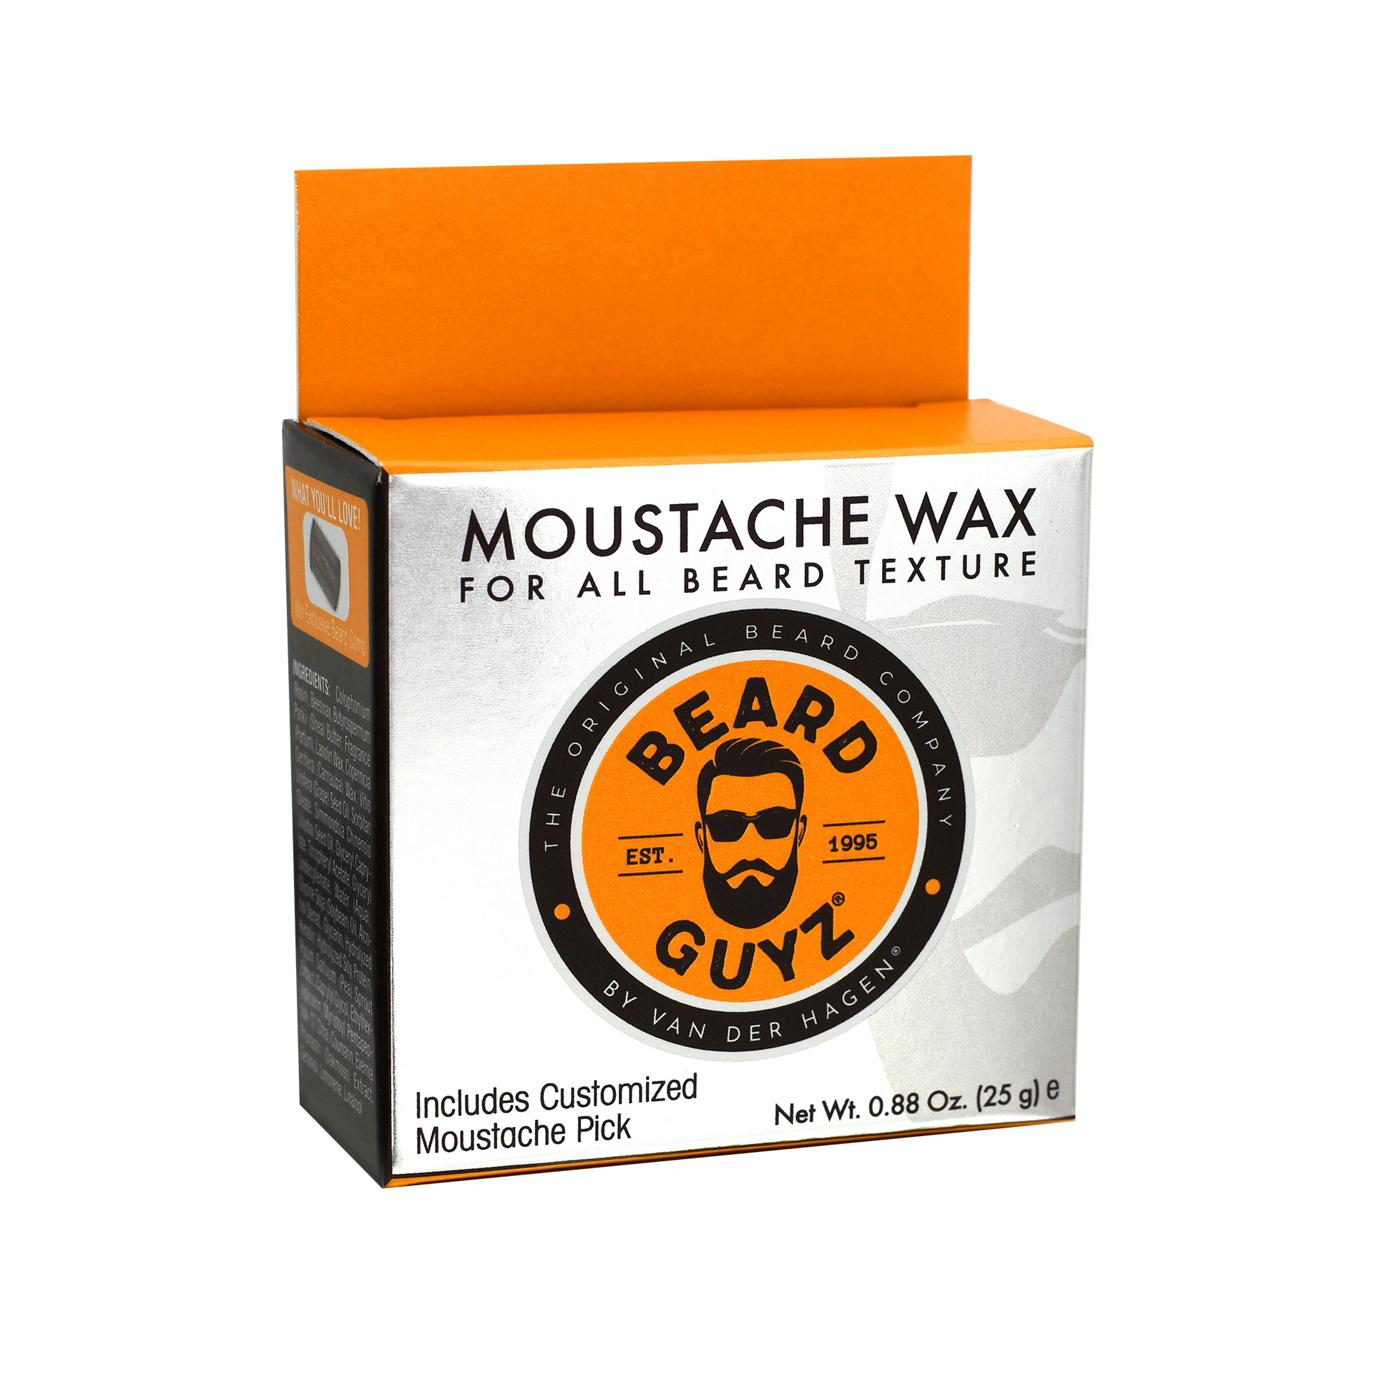 Beard Guyz Moustache Wax; image 1 of 4